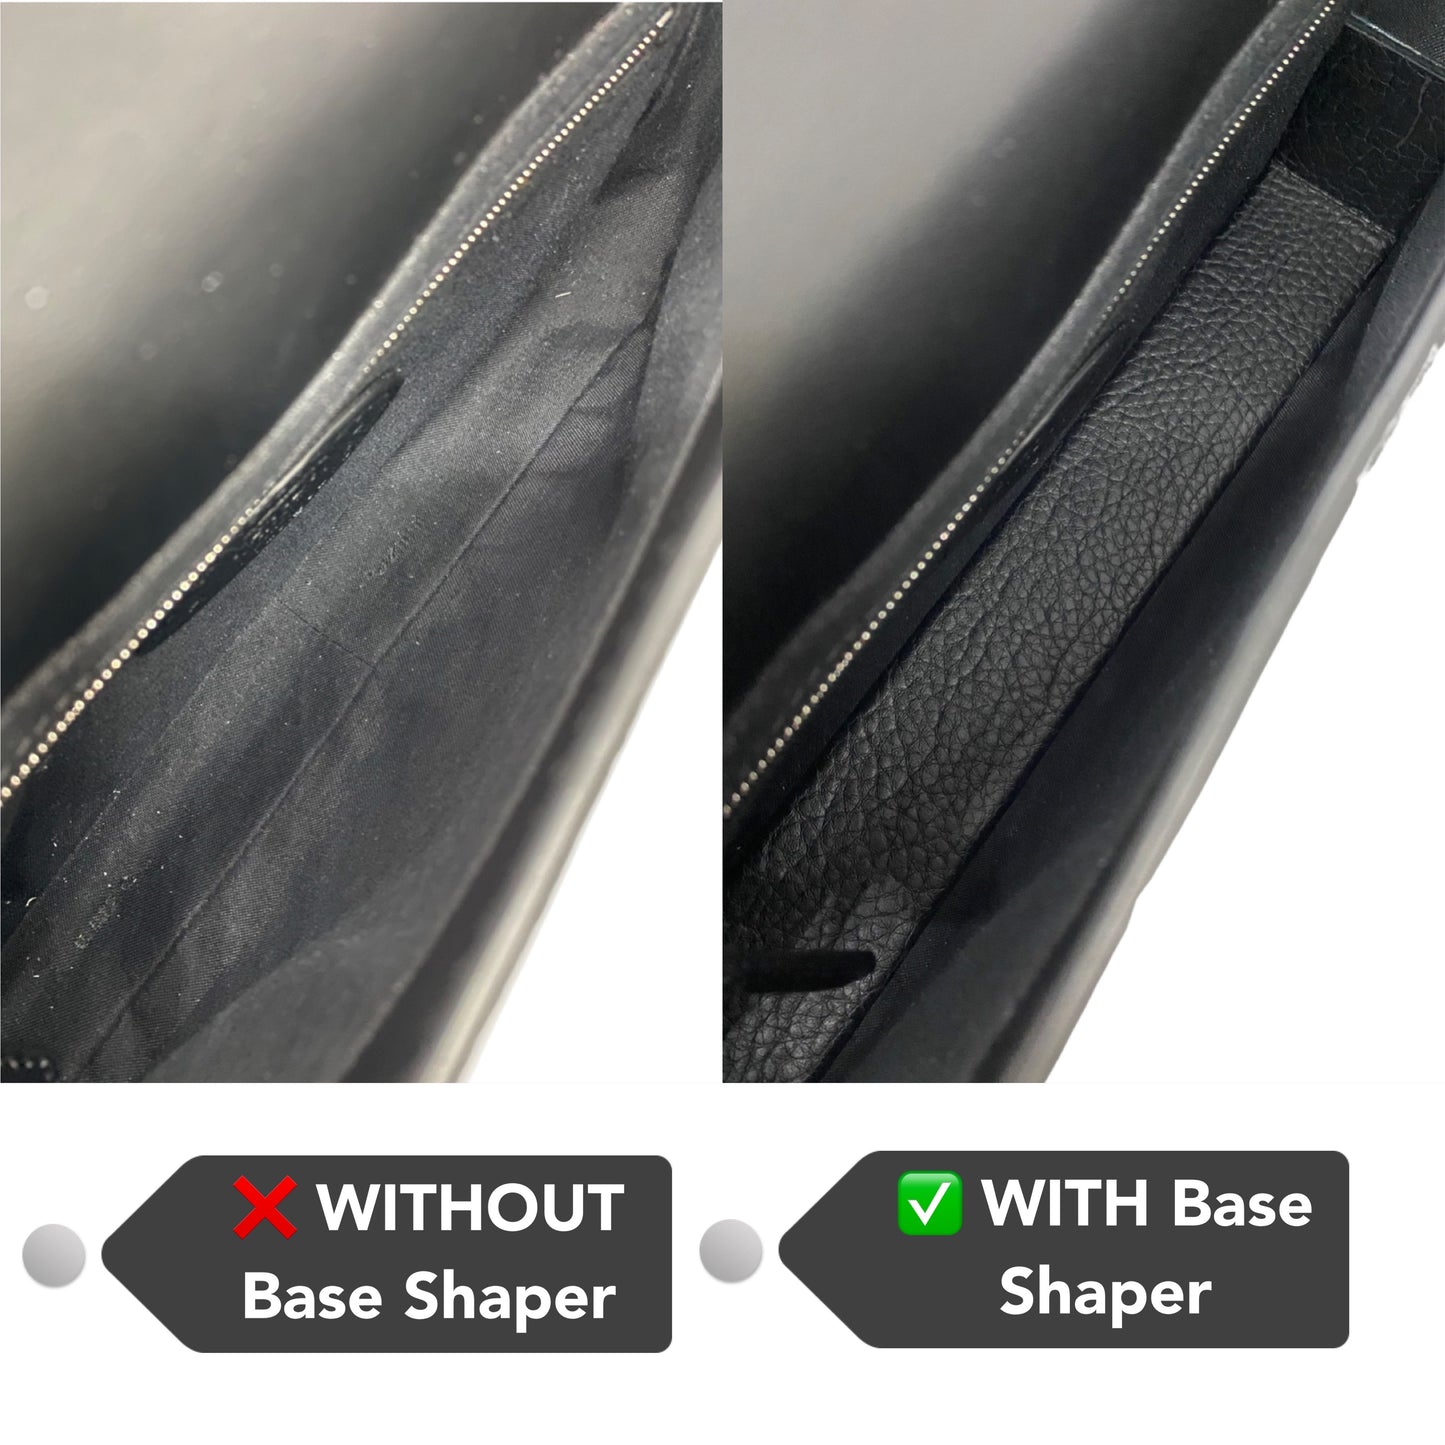 shape of bag without base shaper